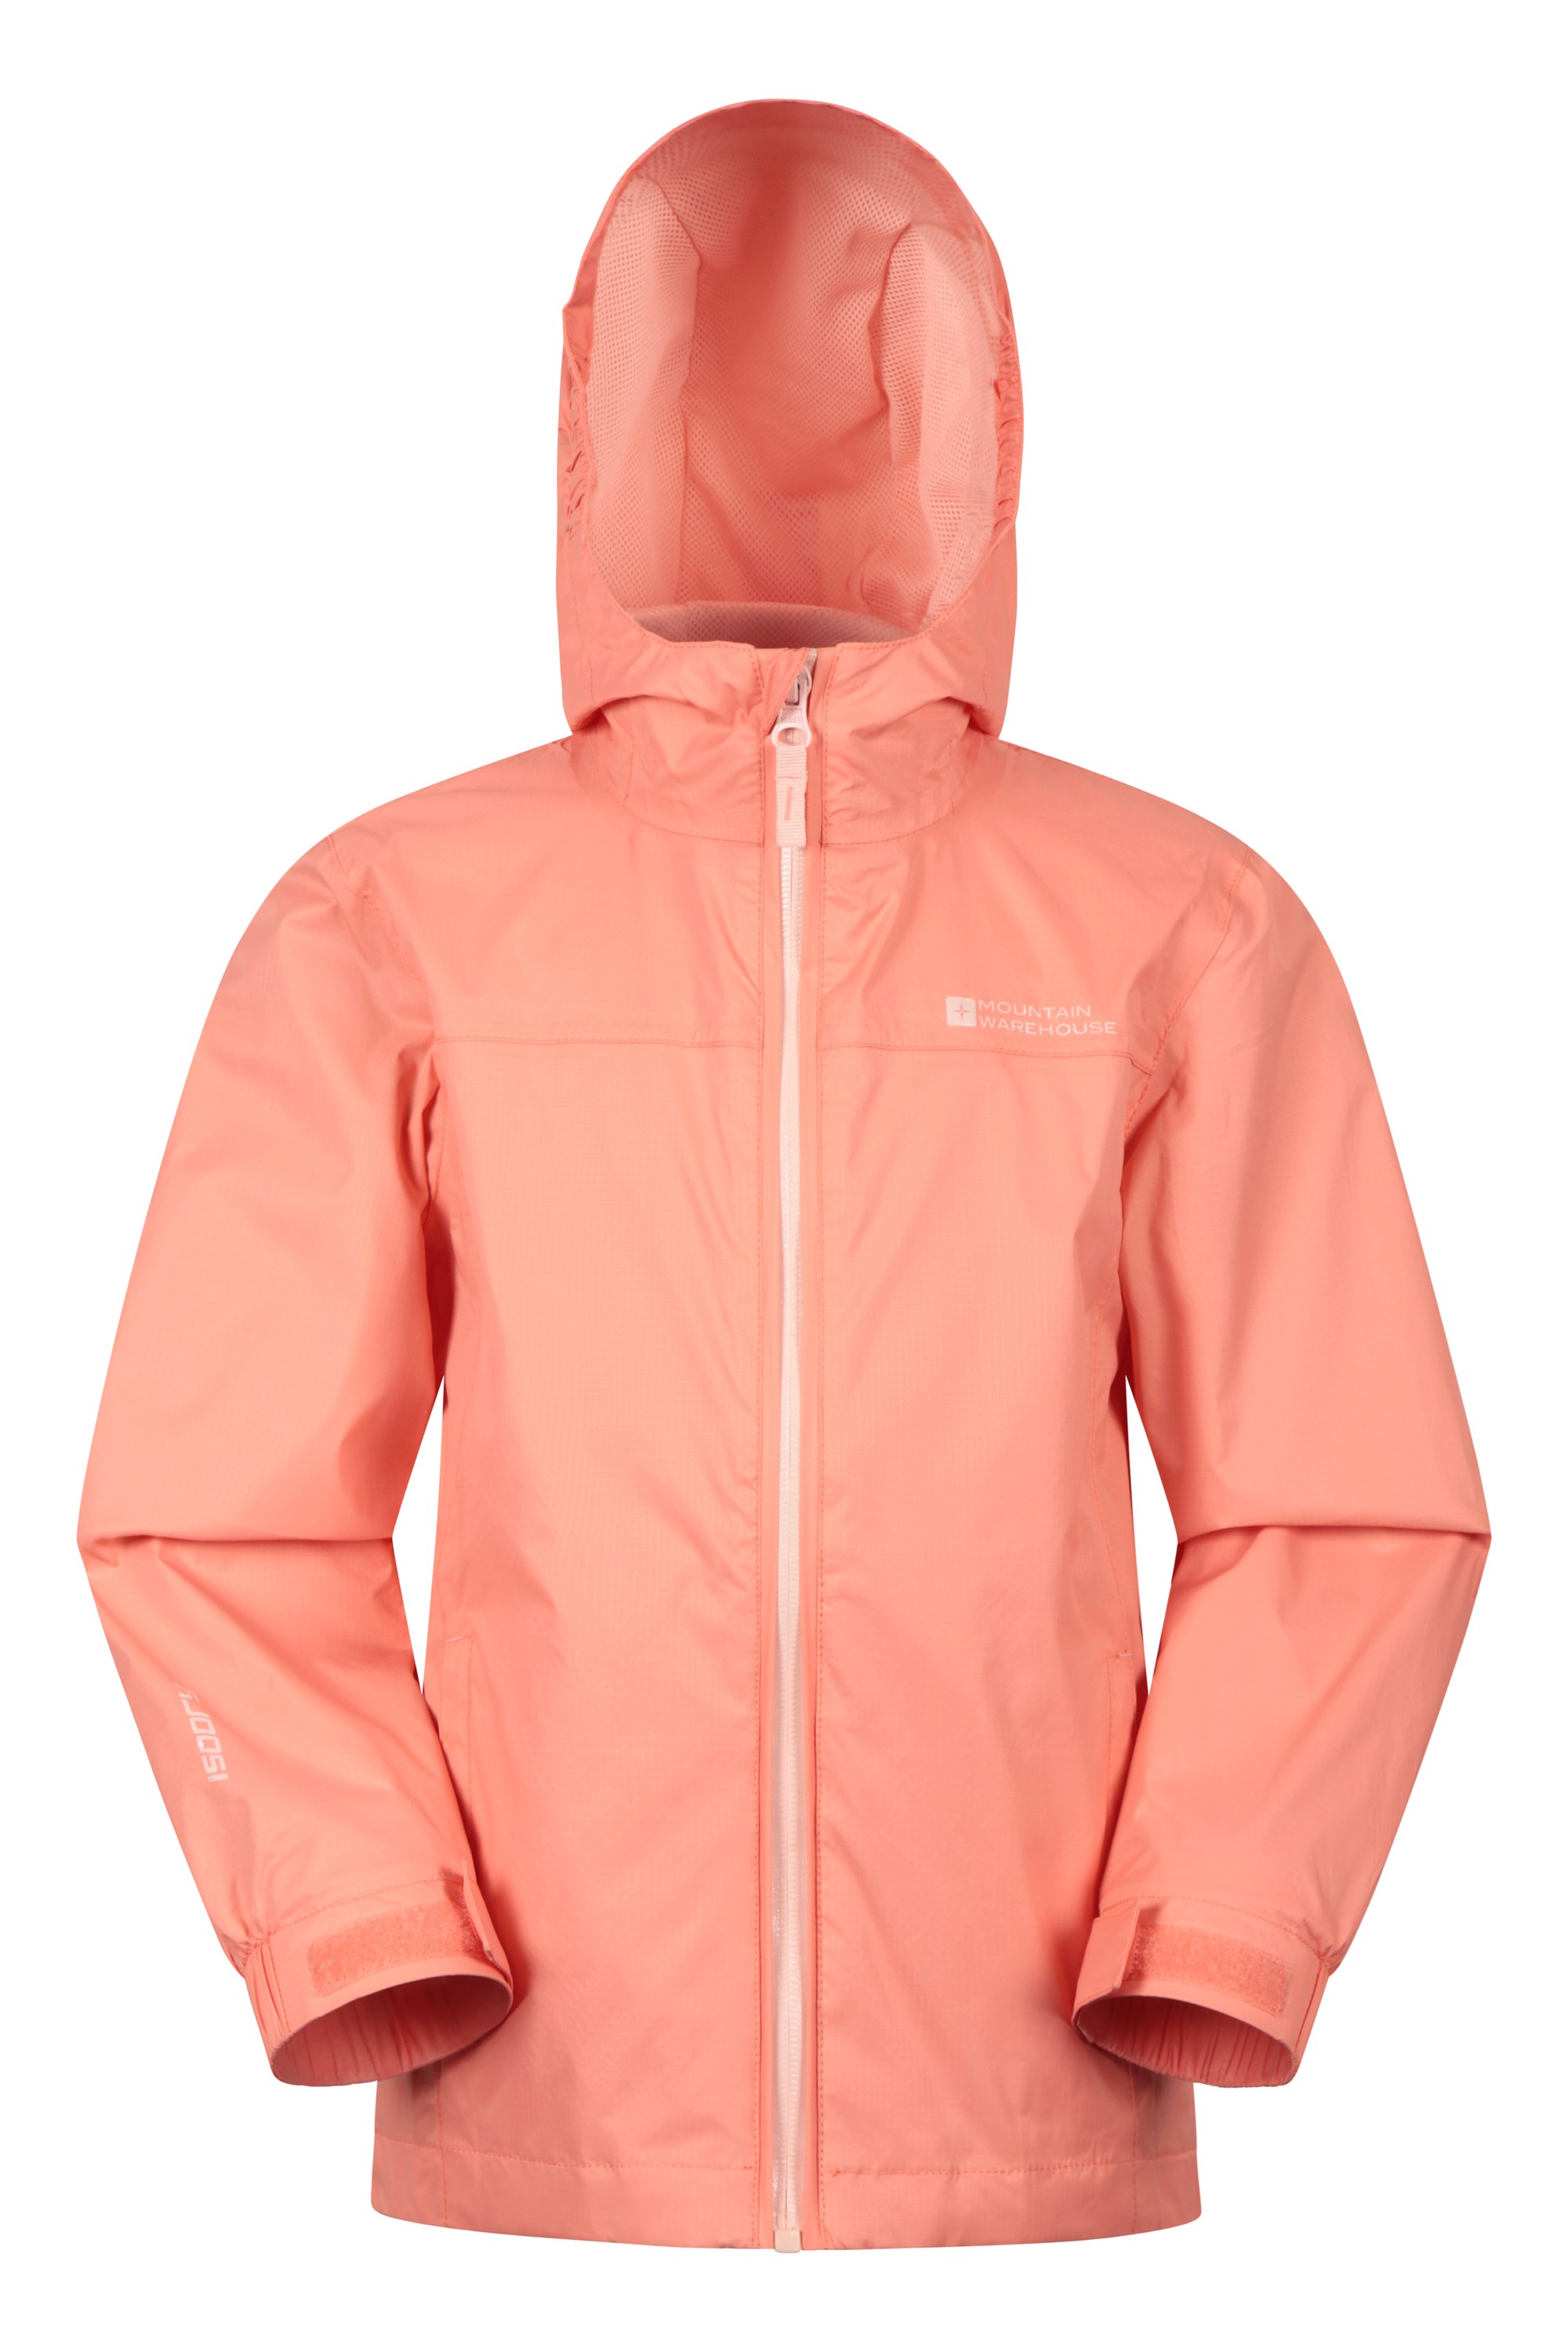 Mountain Warehouse Meteor Kids Waterproof Rain Jacket Breathable